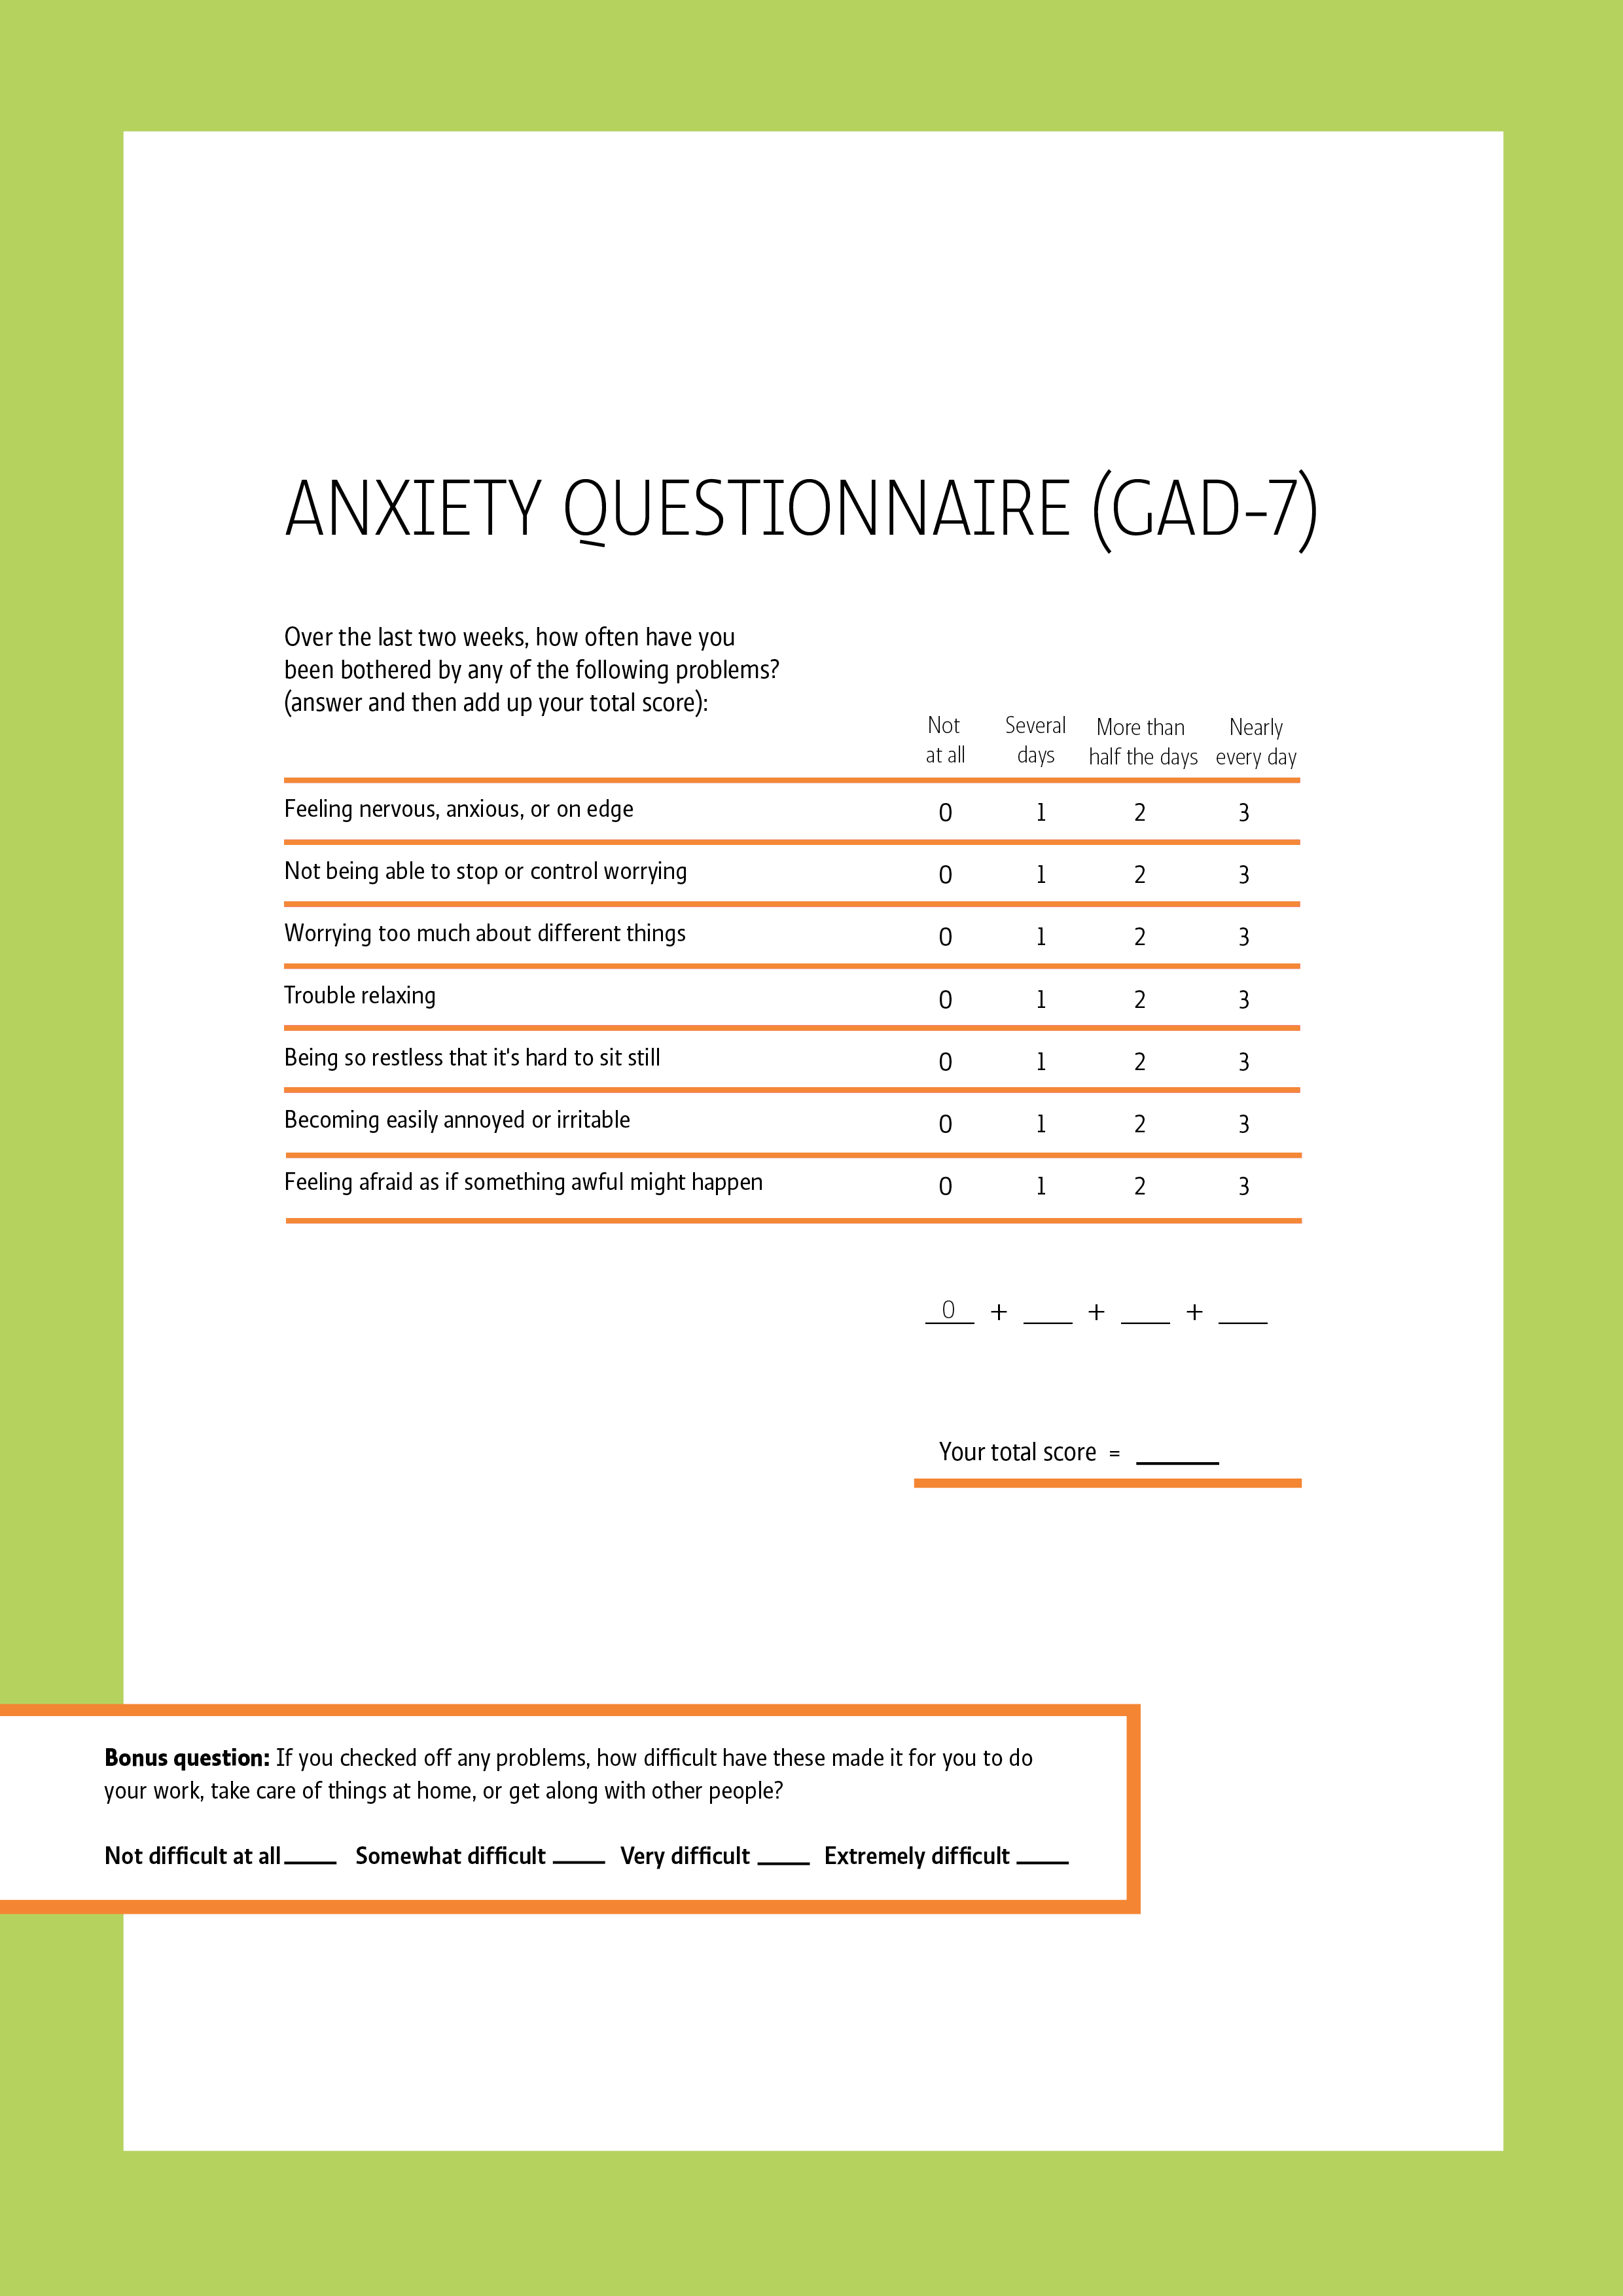 AnxietyQuestionnaire